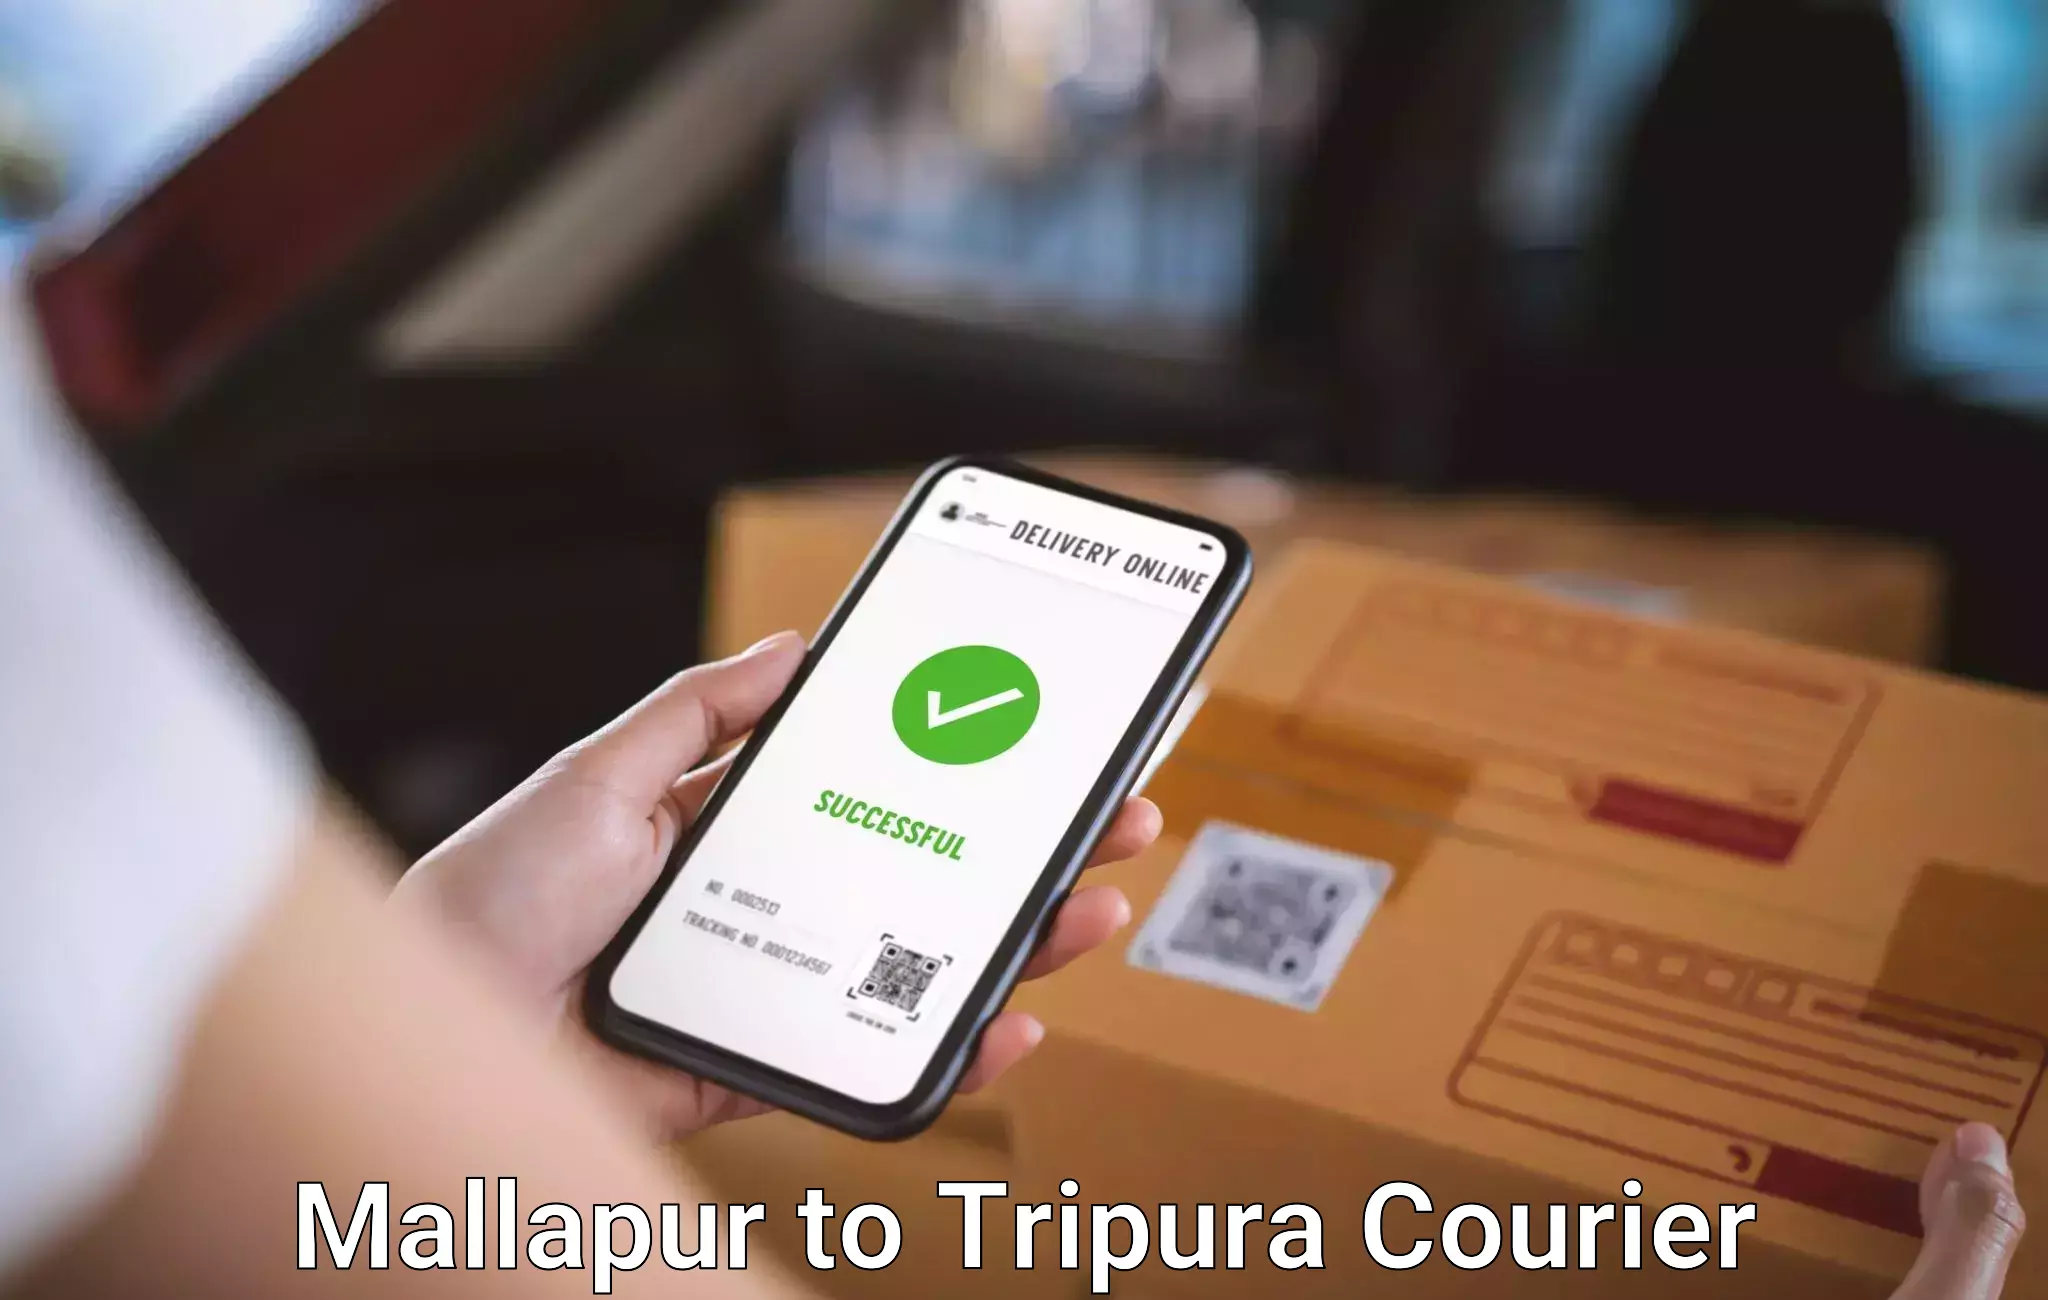 Luggage delivery network Mallapur to North Tripura